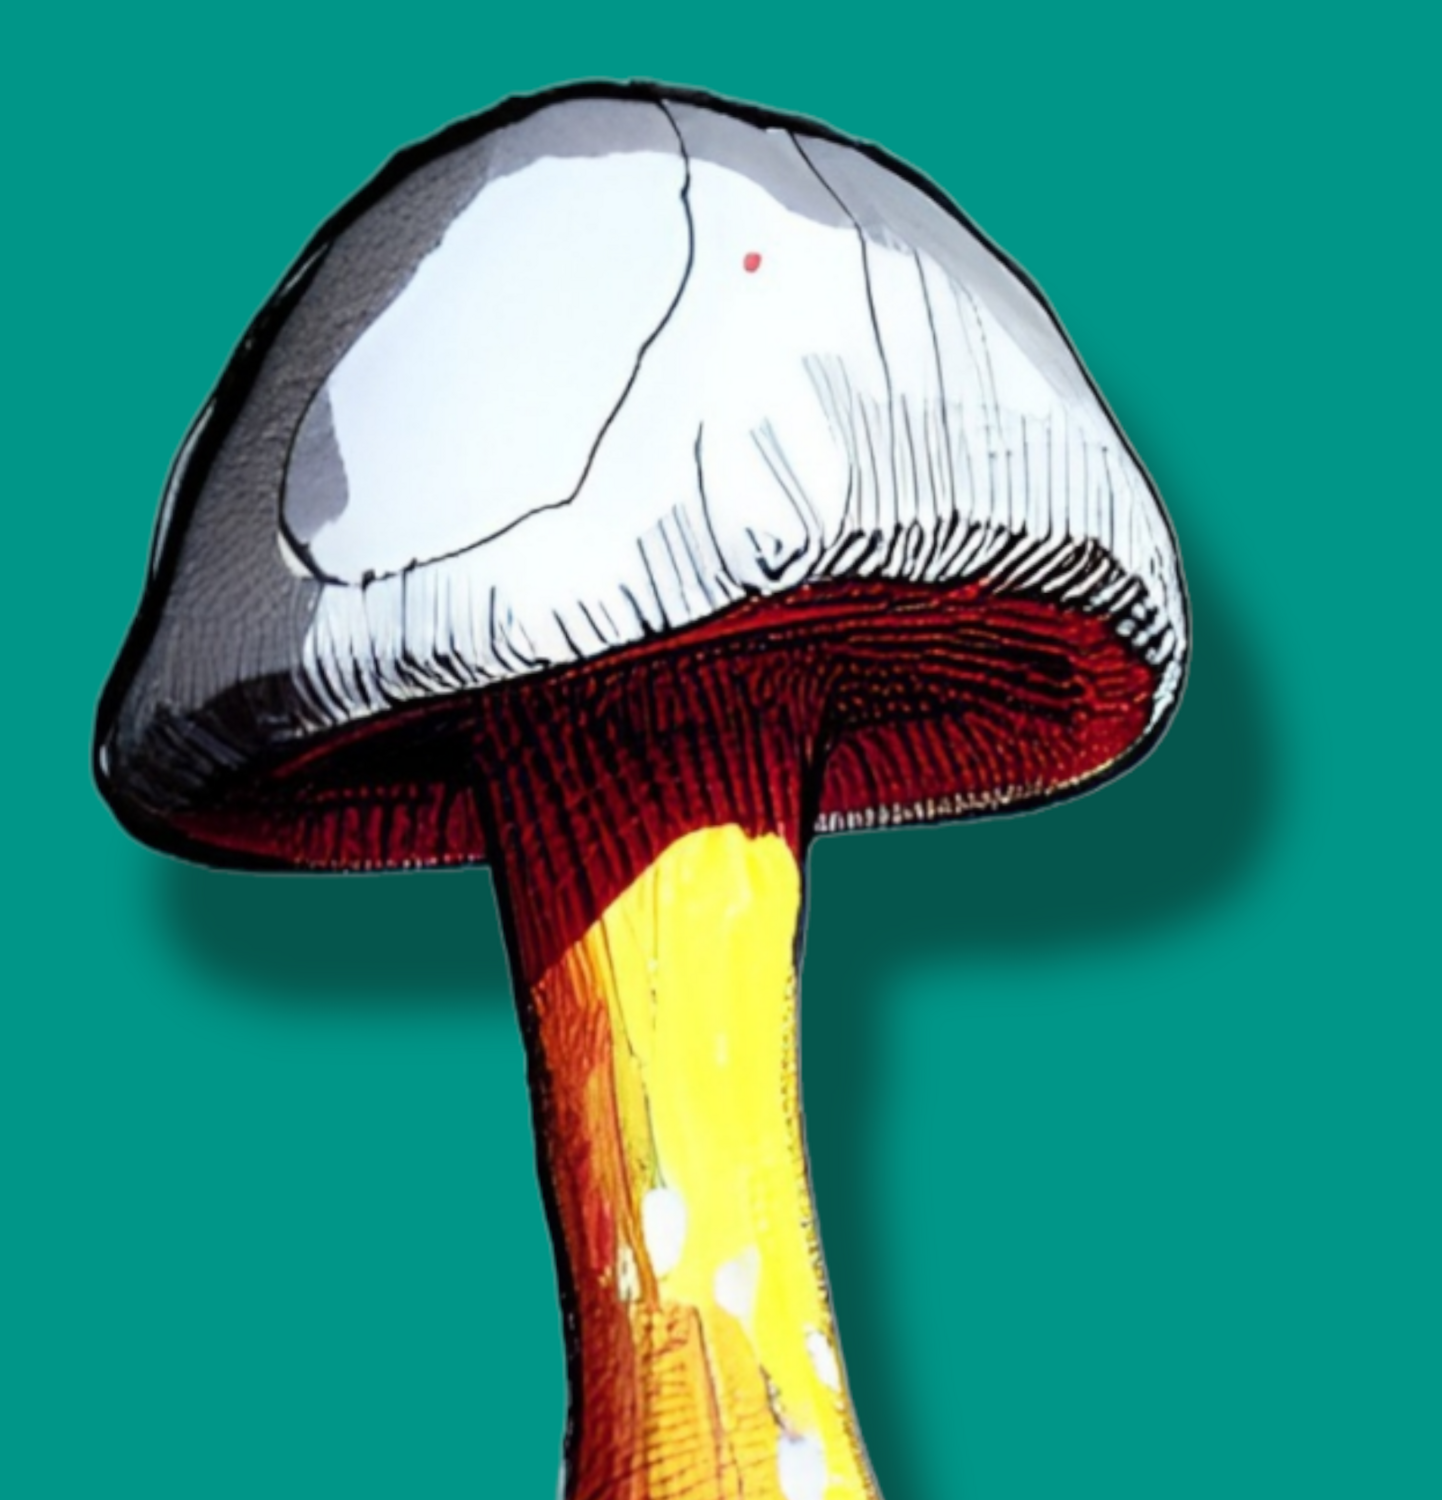 Amateur Naturalist Survives Mushroom Poisoning Thanks to Experimental Treatment 